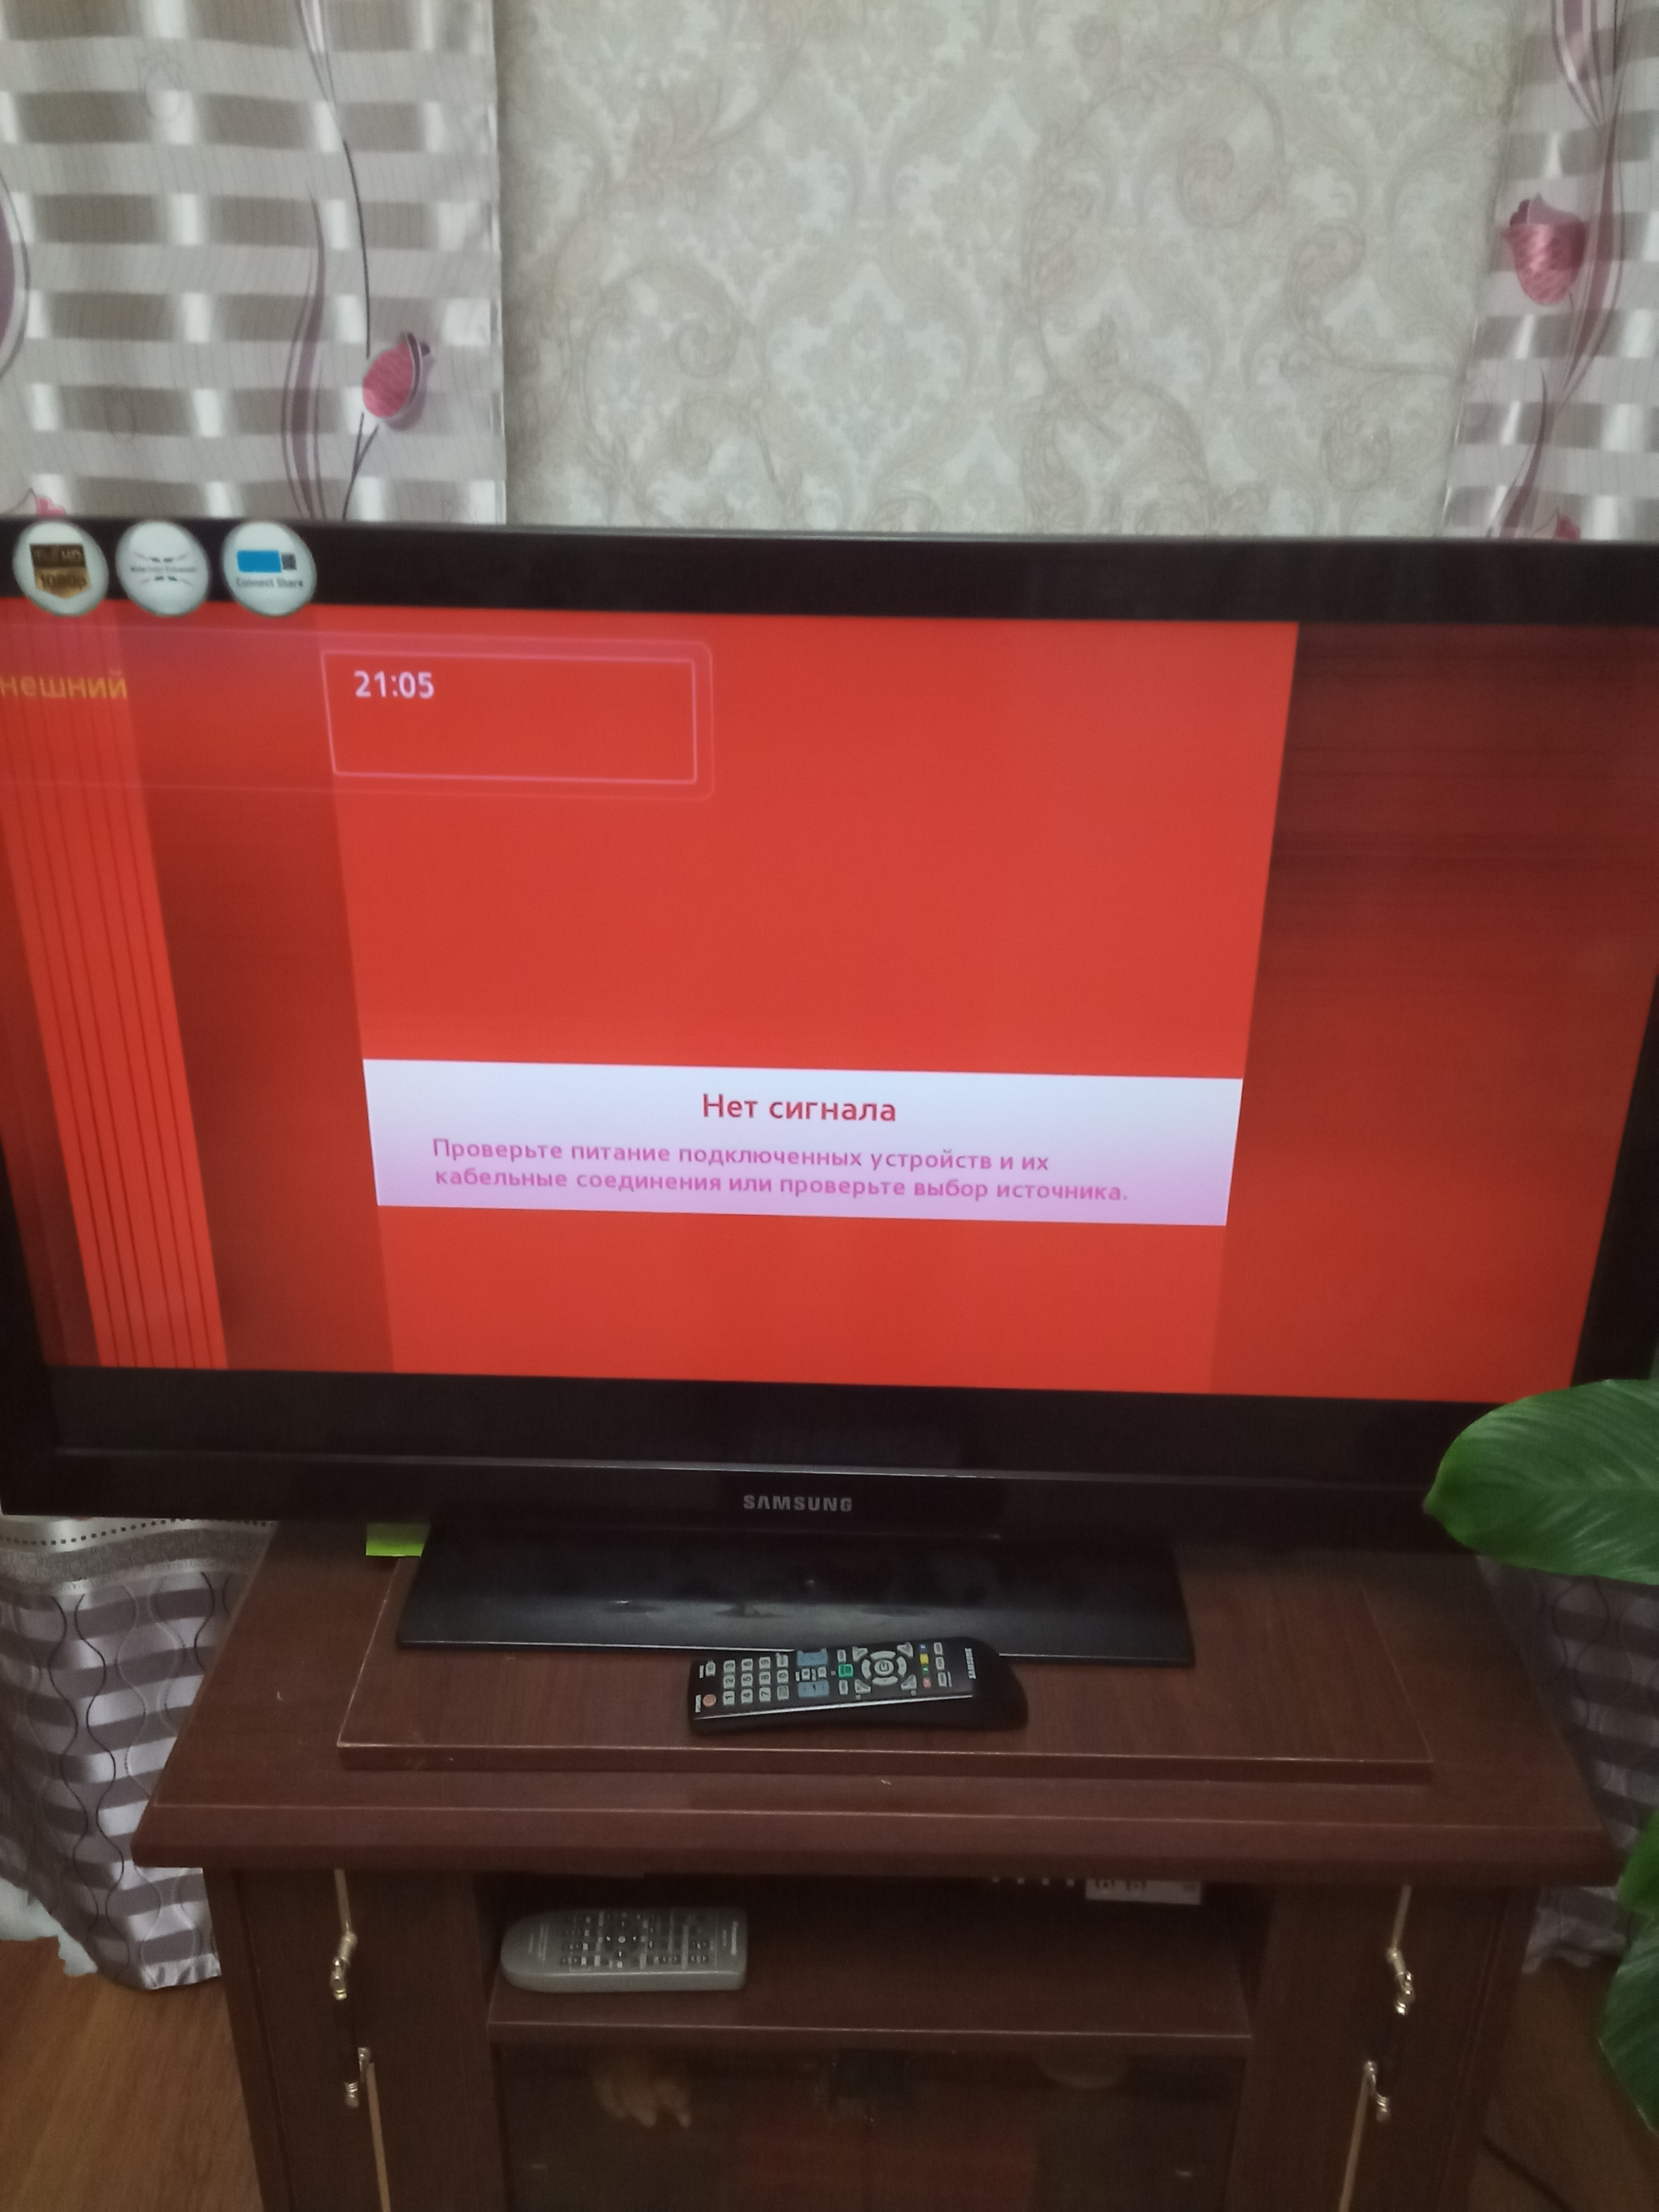 Красное изображение на экране телевизора